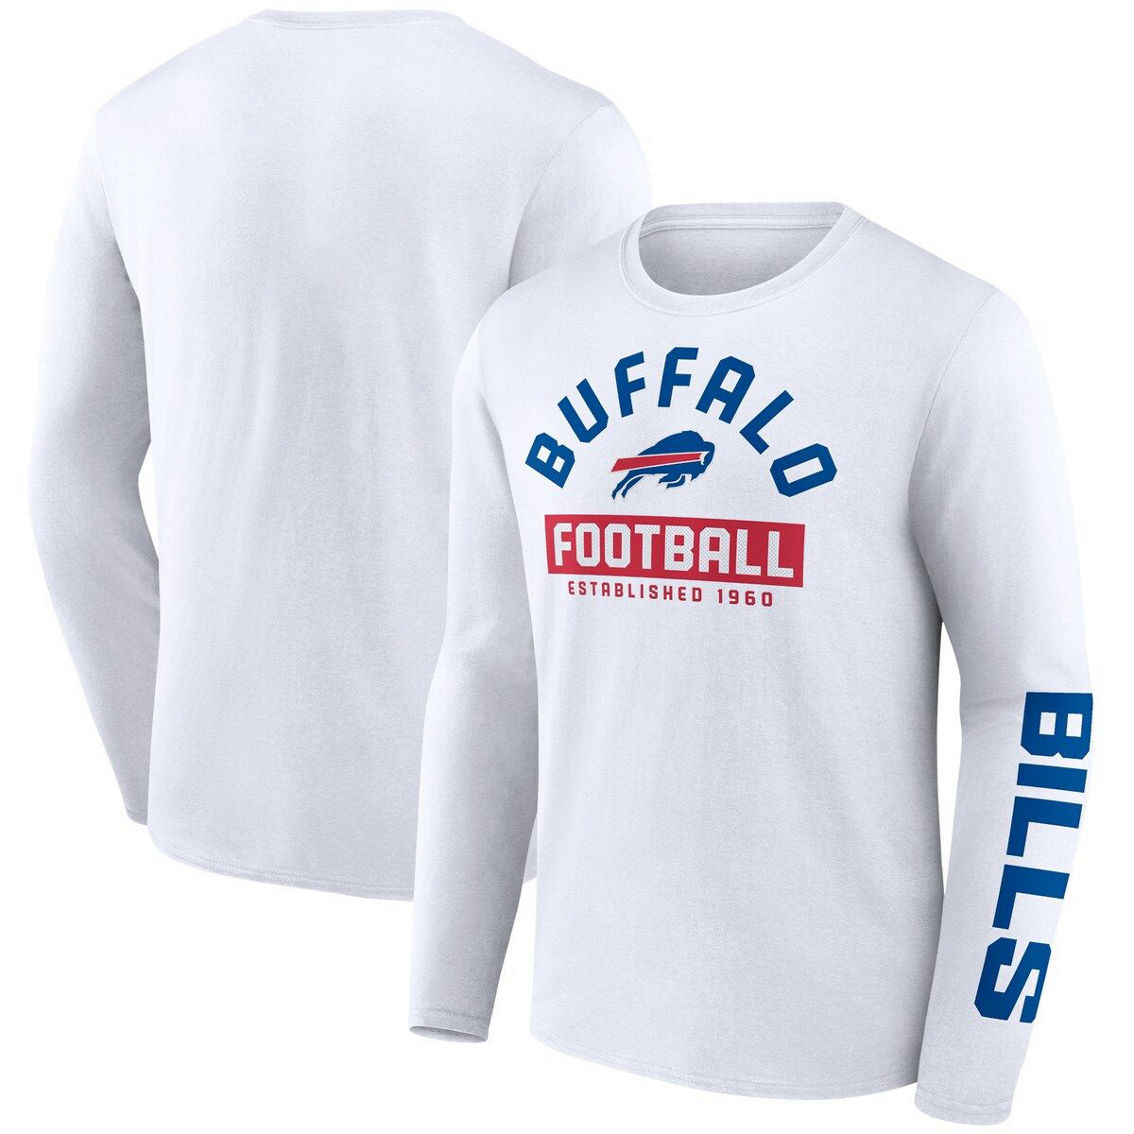 Fanatics Branded Men's White Buffalo Bills Long Sleeve T-Shirt - Image 2 of 4